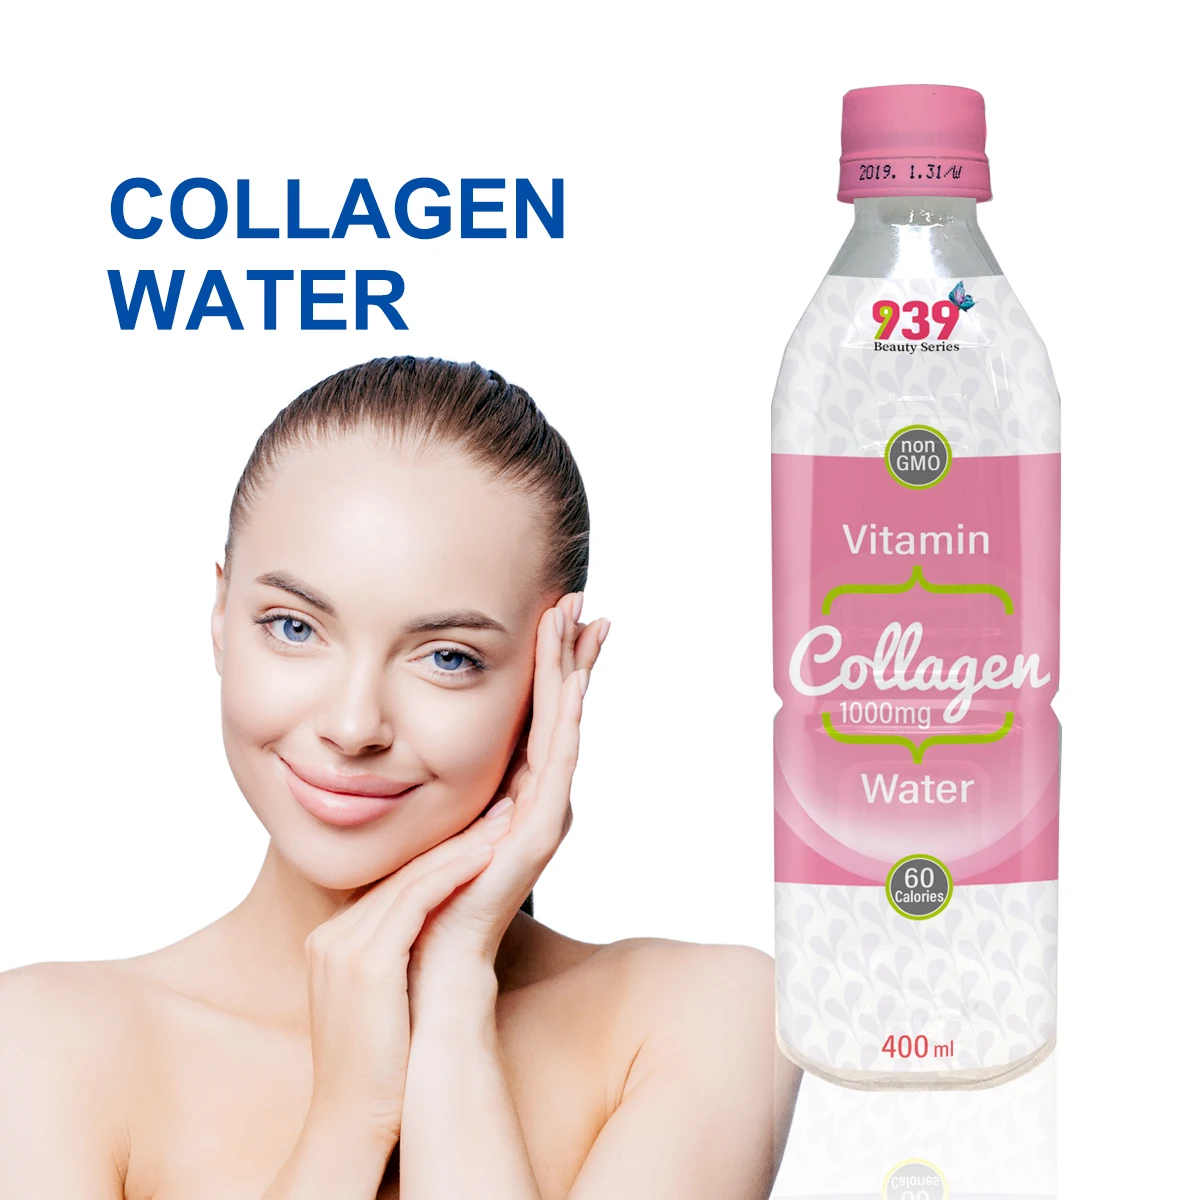 
Collagen Water Beverage Product Development 